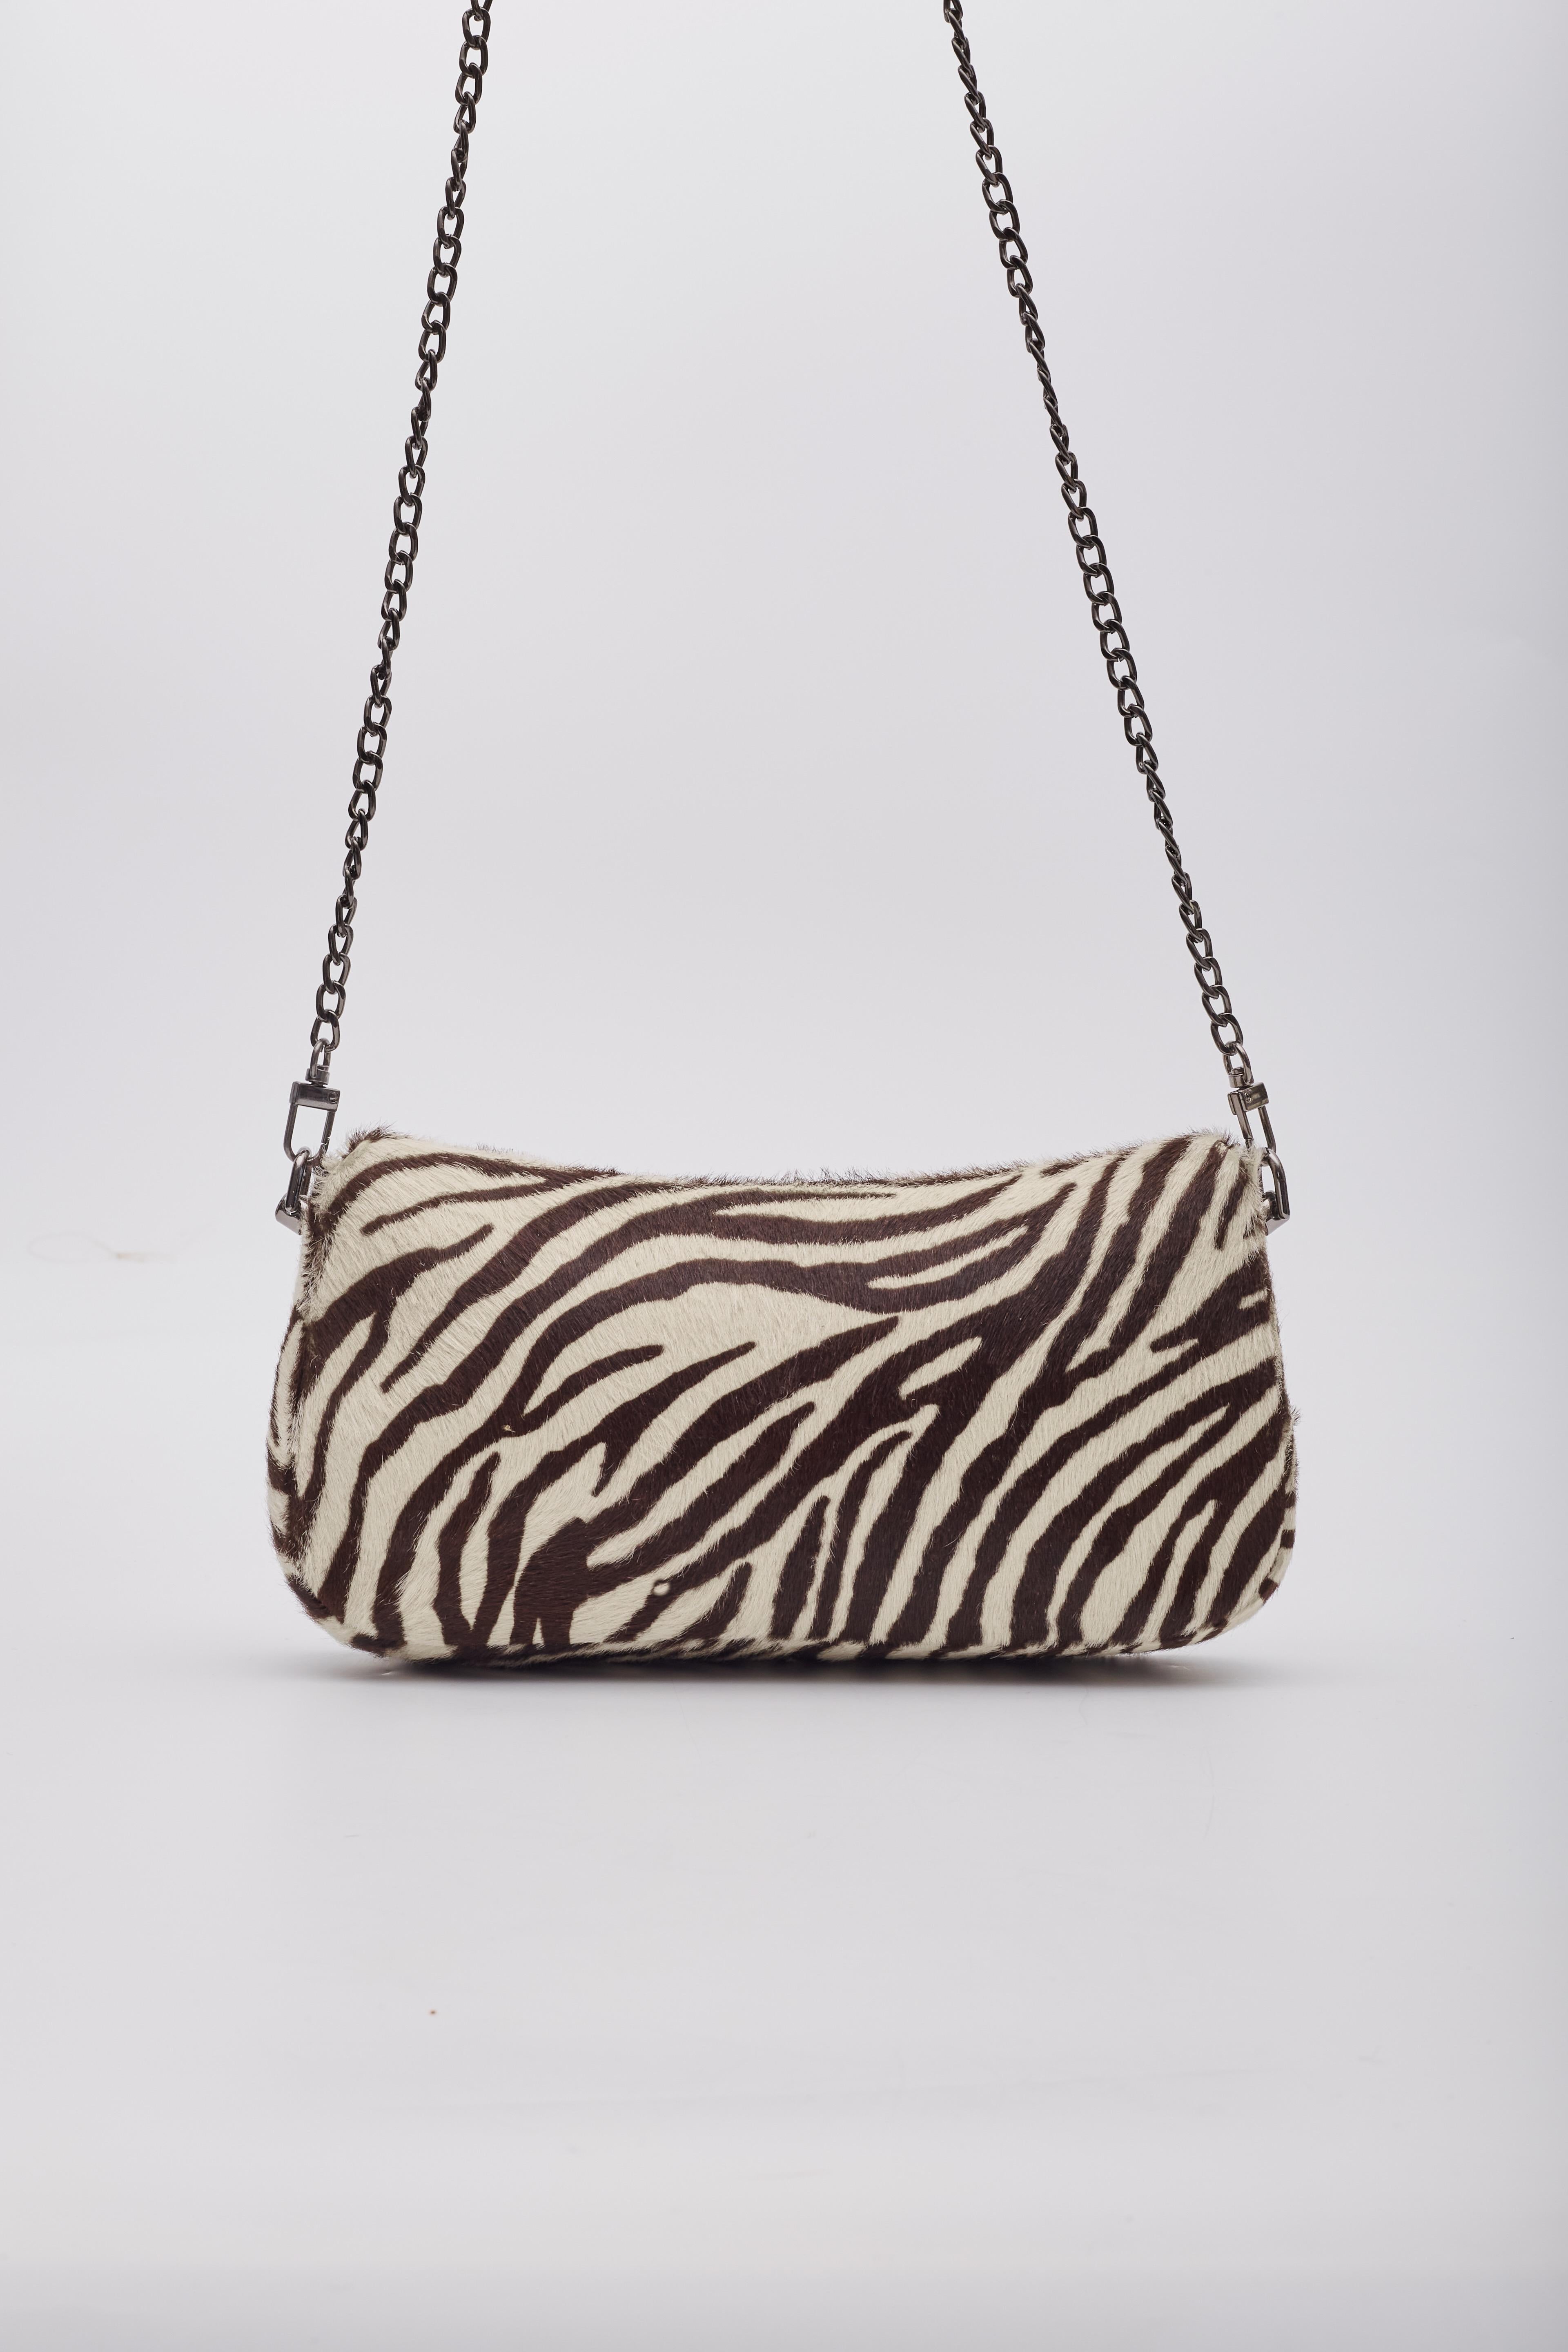 Dior Vintage Pony Hair Malice Zebra Shoulder Bag In Good Condition For Sale In Montreal, Quebec